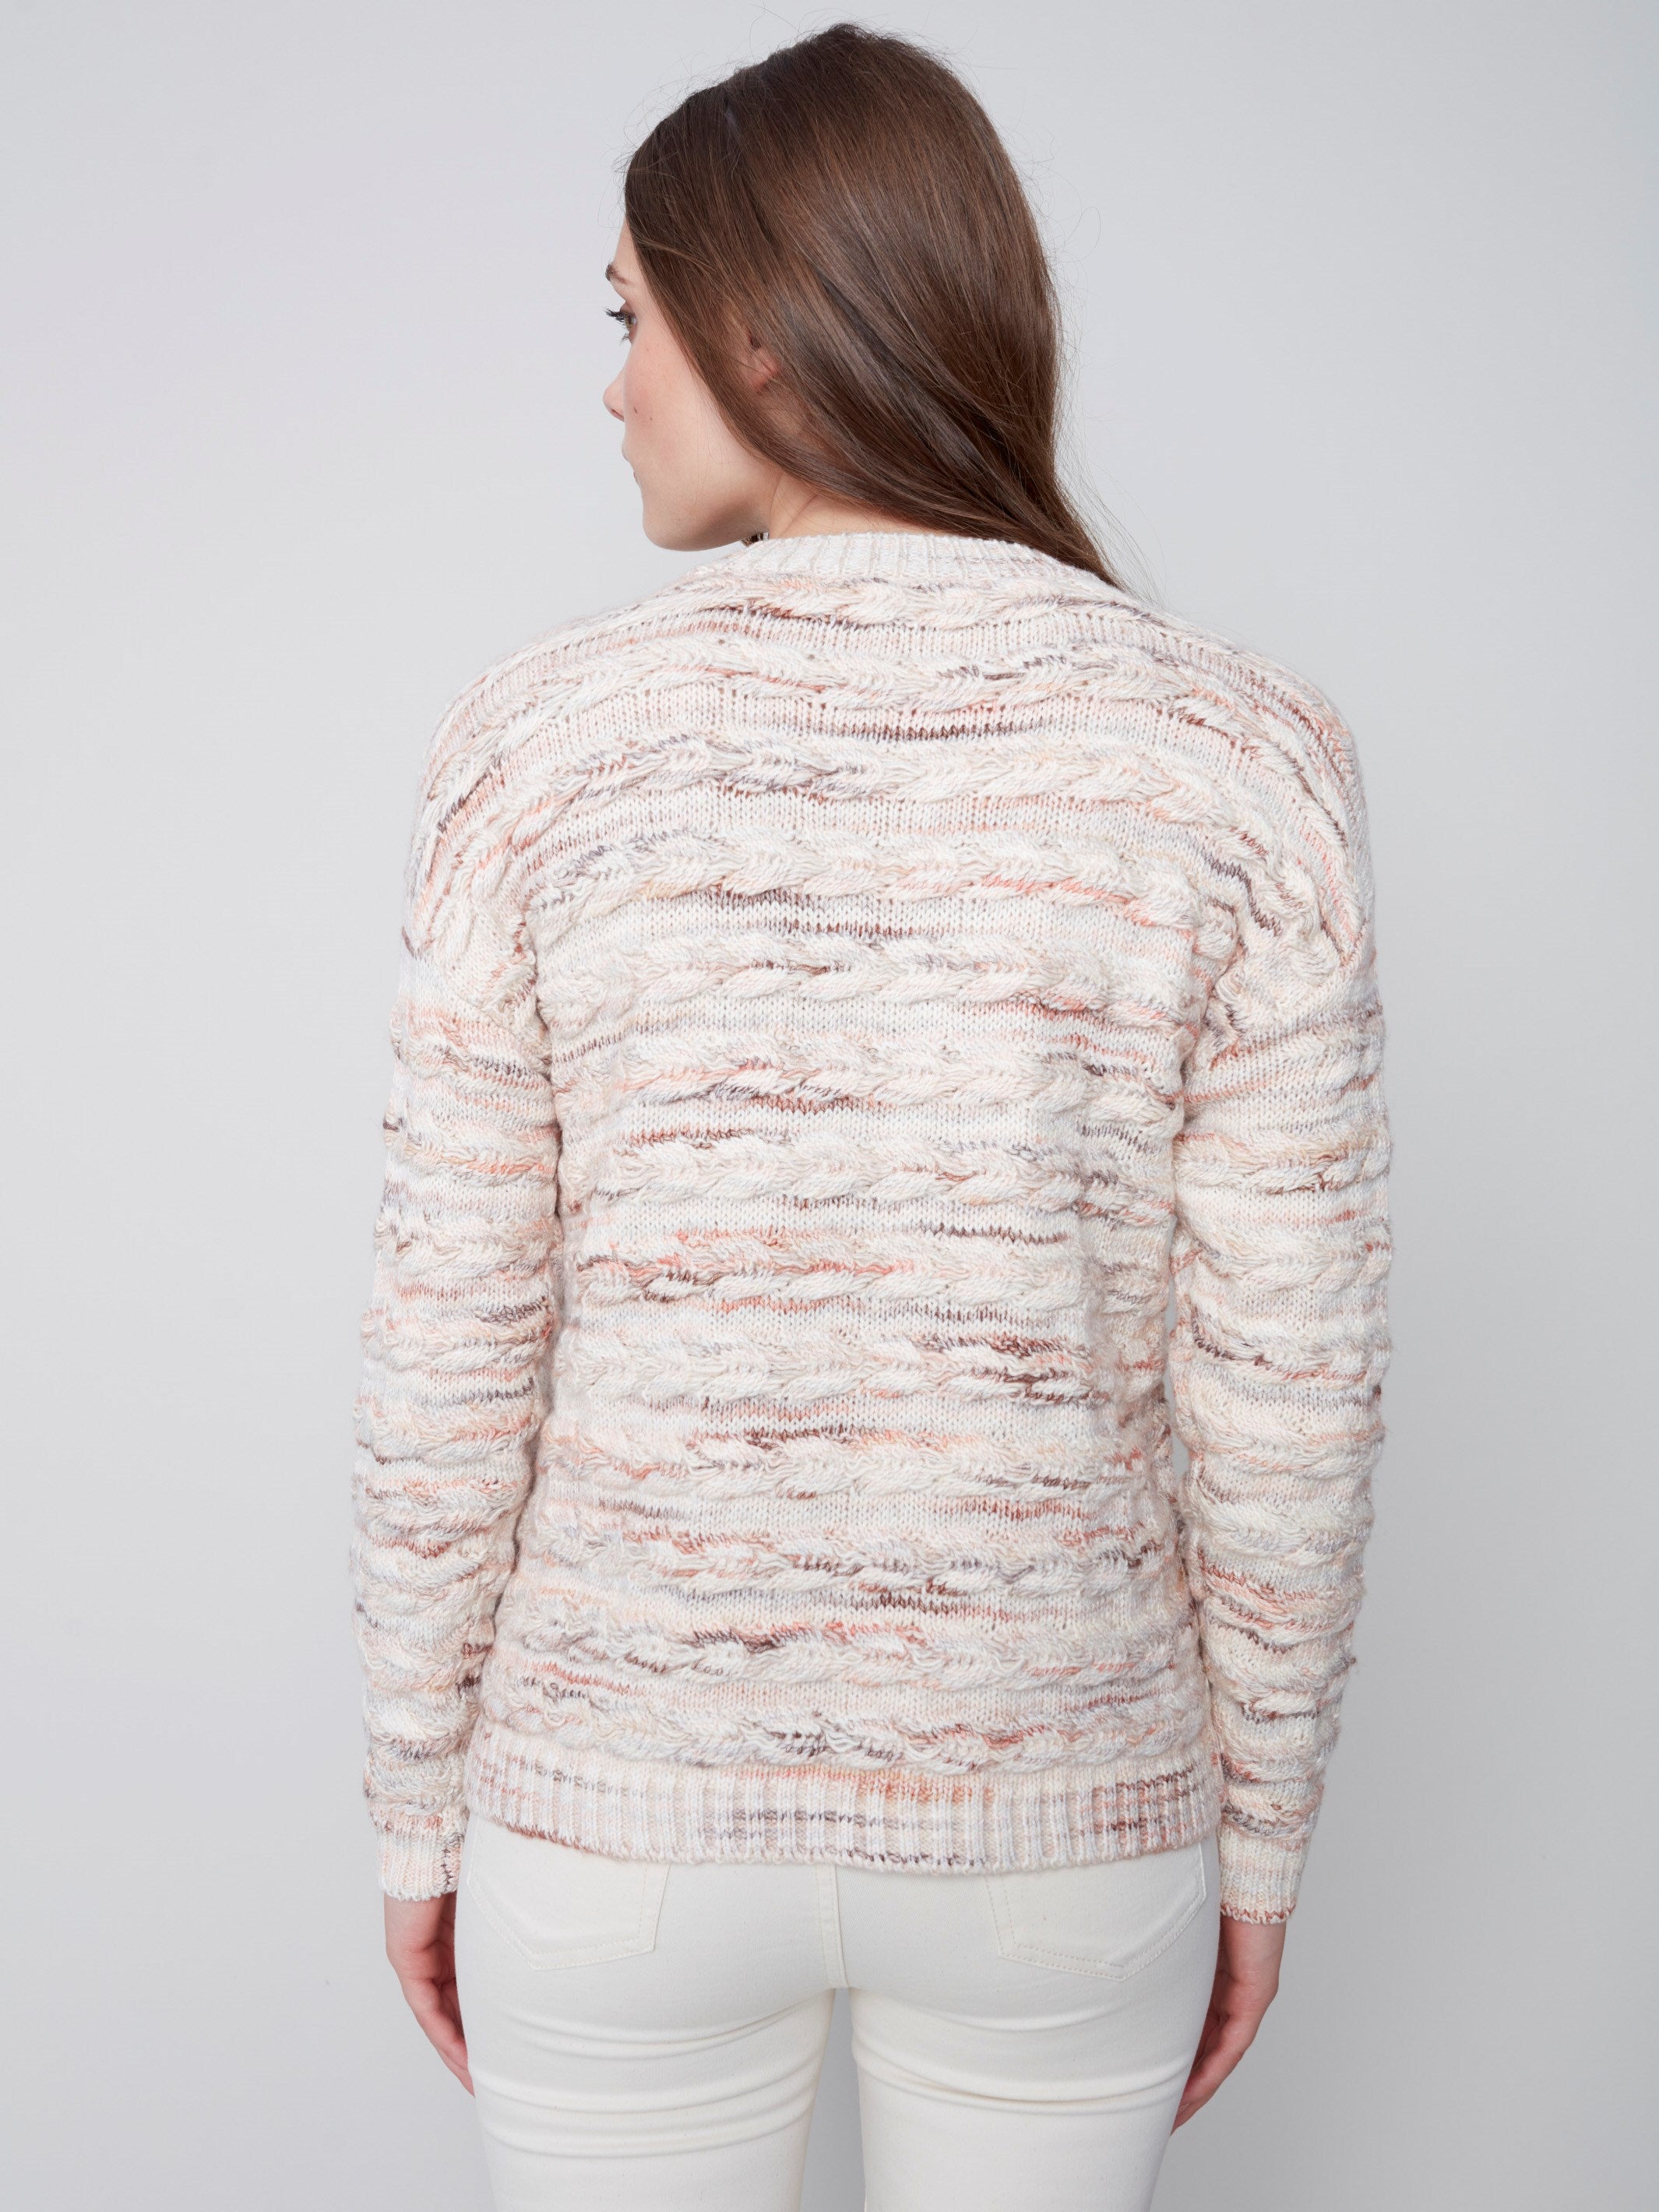 Sweater with Decorative Stitching - Powder